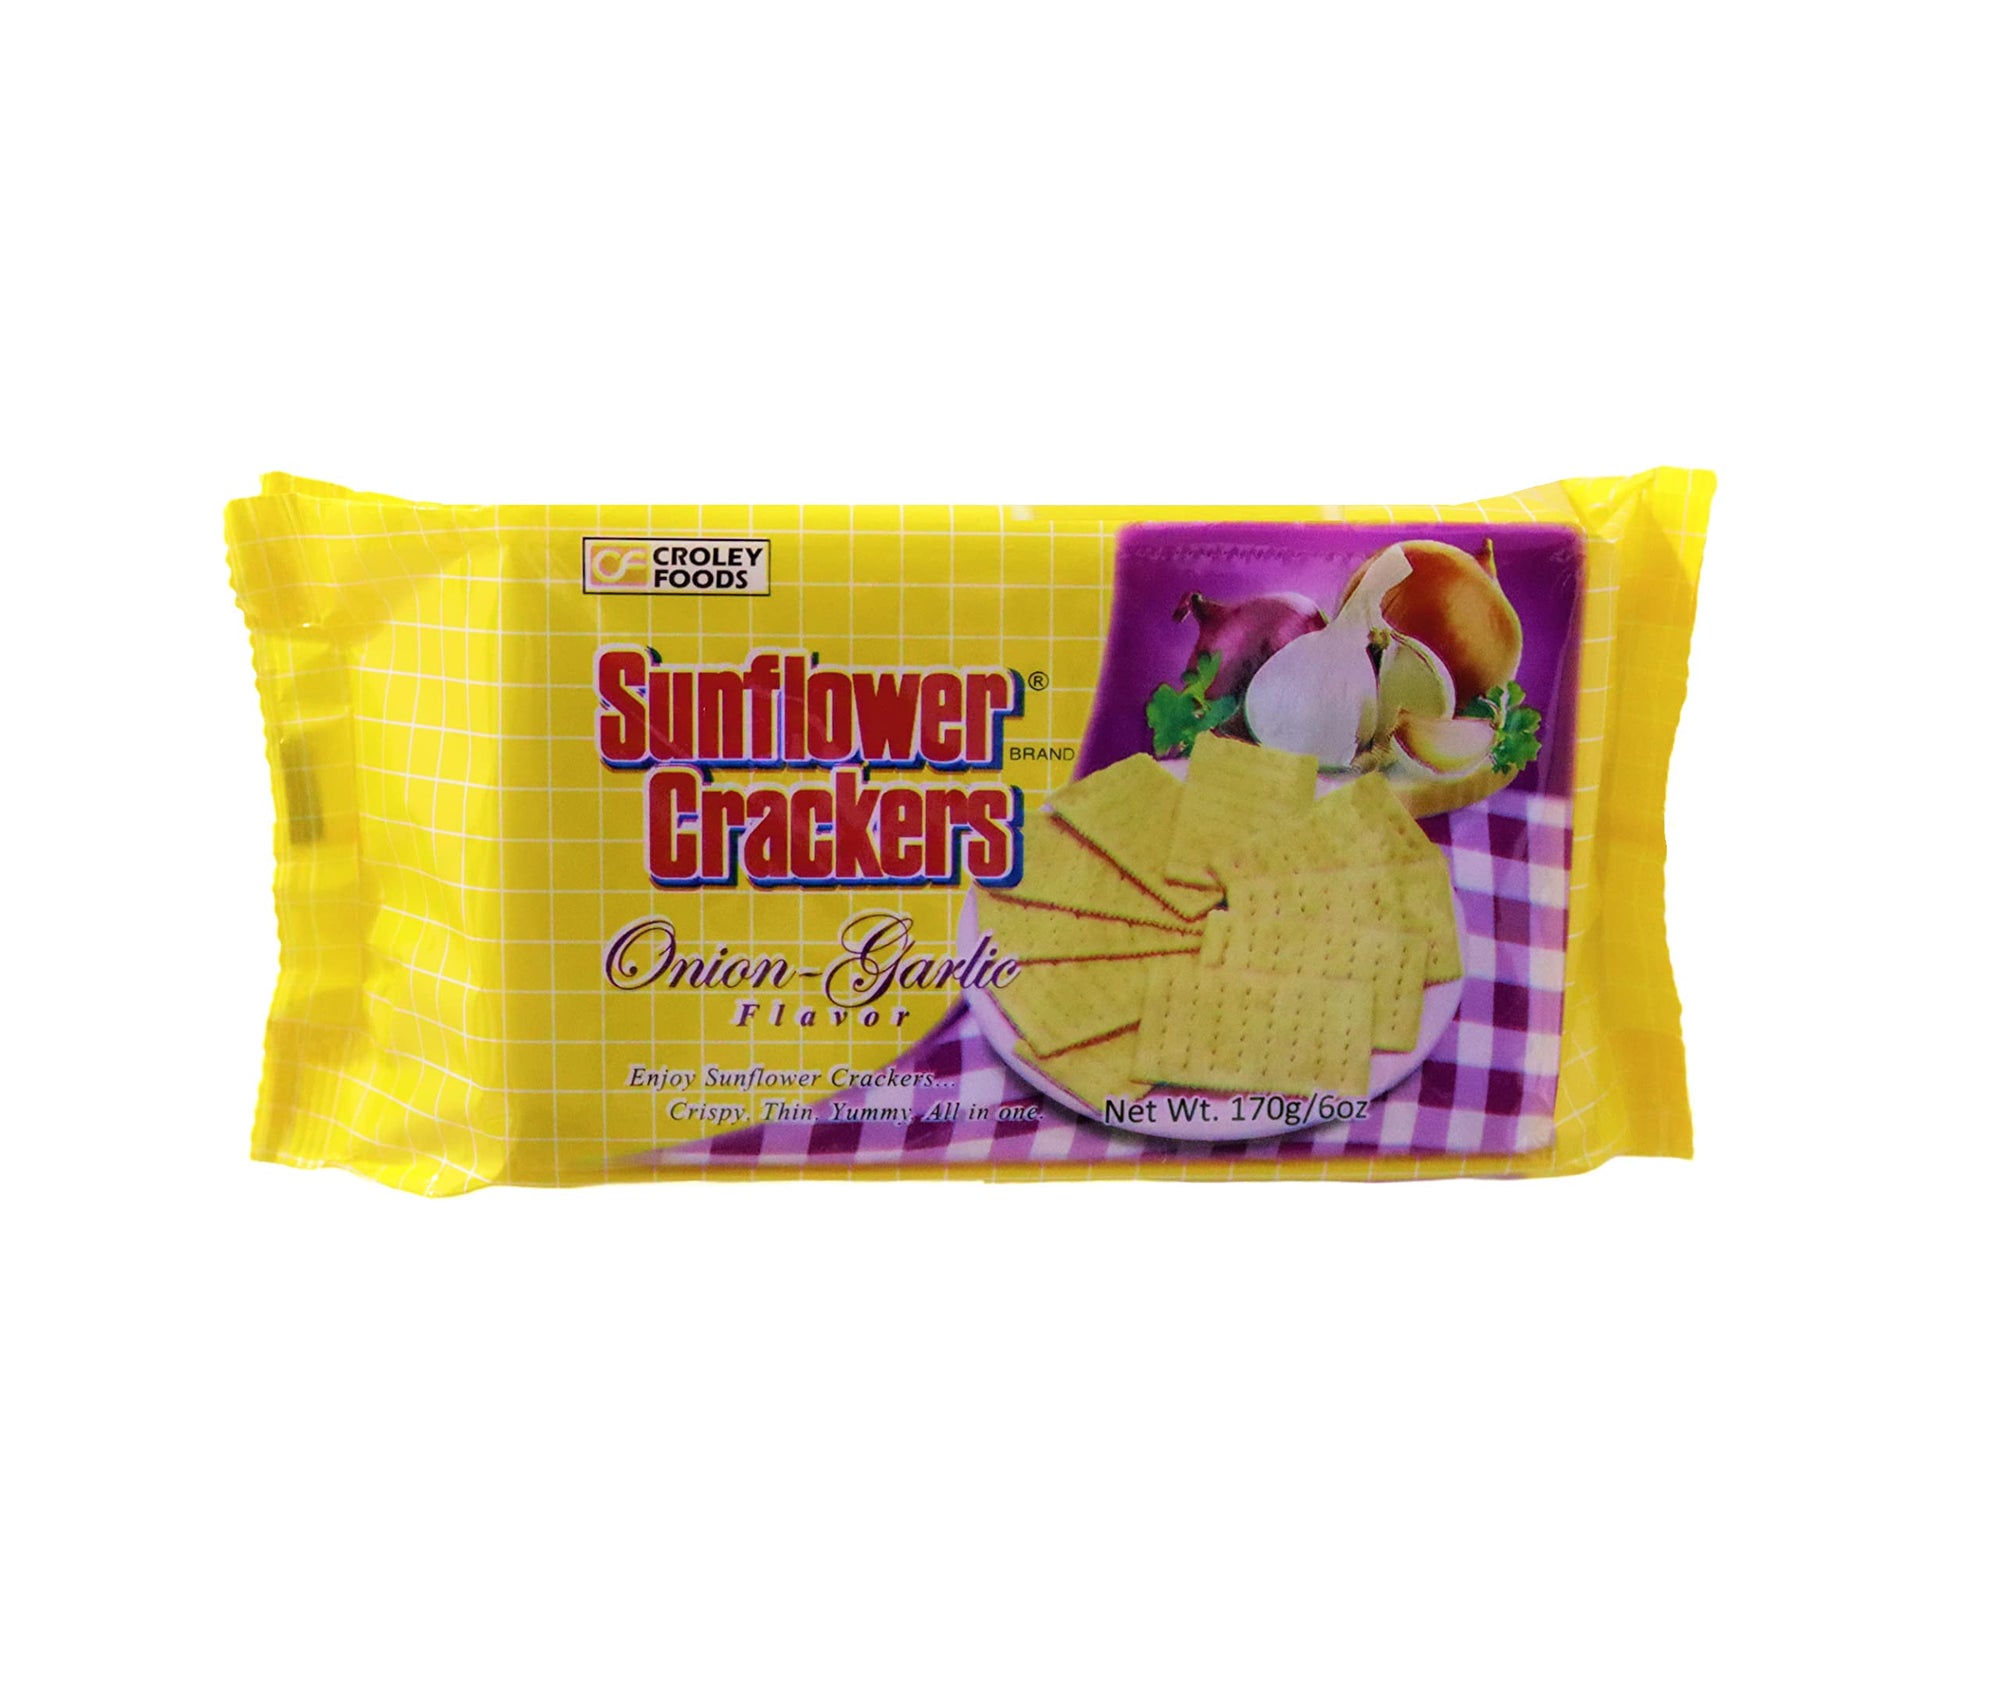 Croley Foods Sunflower Crackers, Onion-Garlic Flavor, 7-Pack, 6 oz (170g)